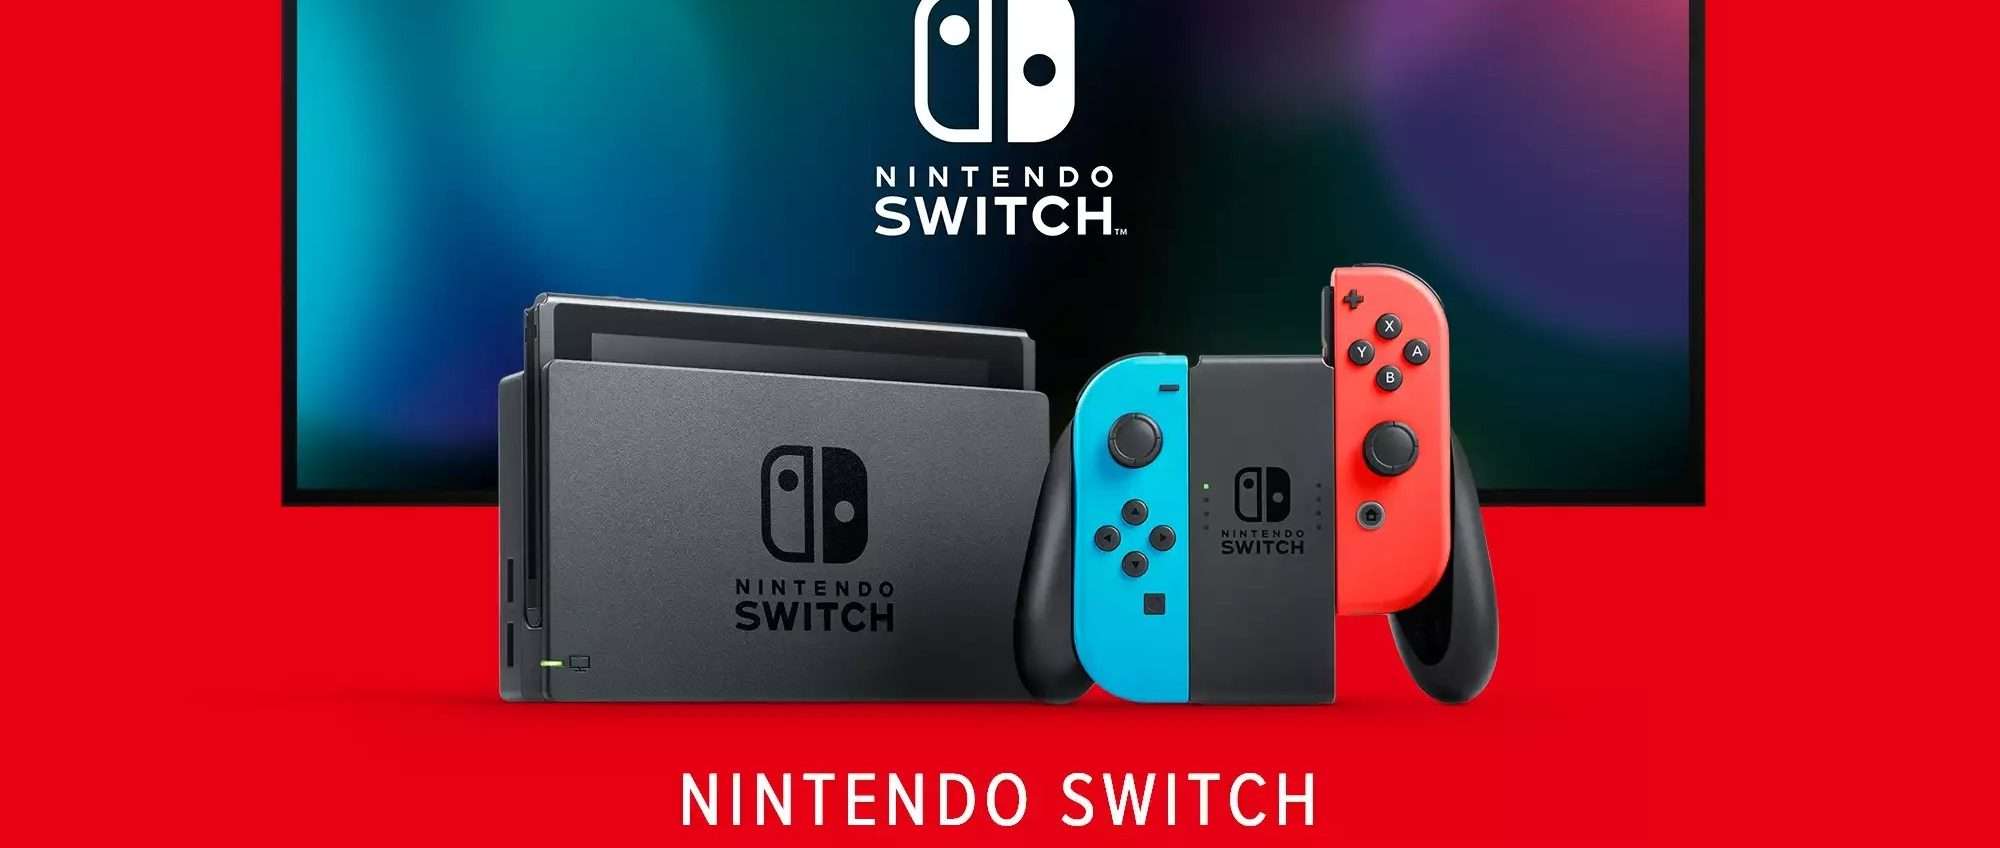 Nintendo Switch in offerta a 243€: è un VERO AFFARE (anche a rate)